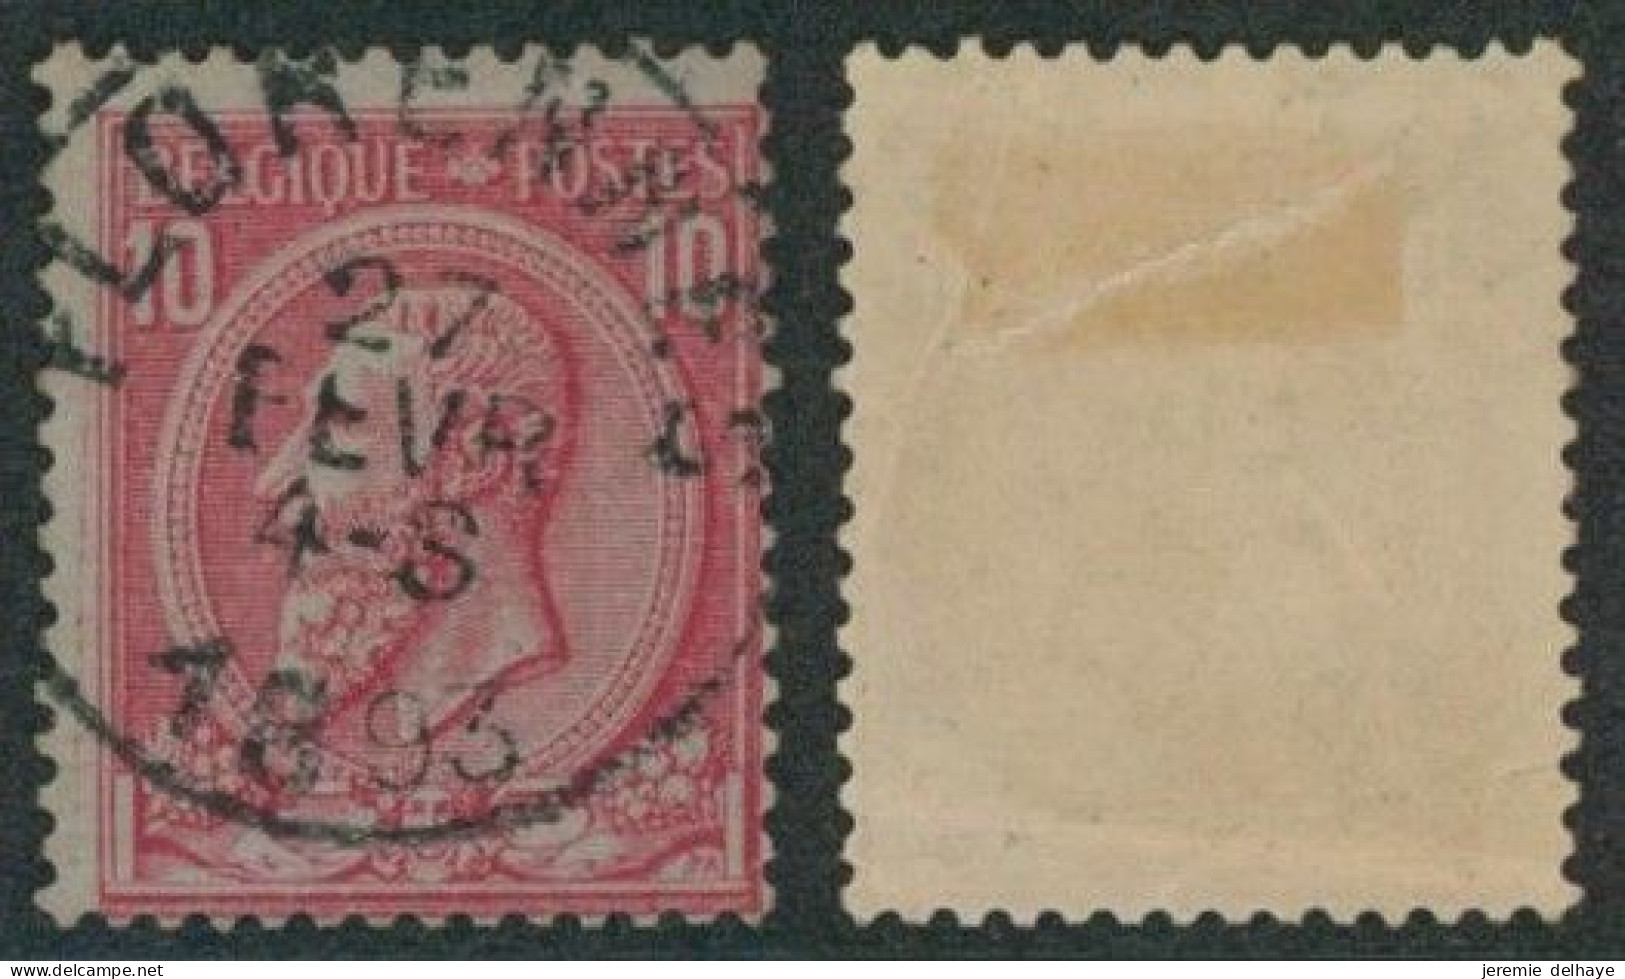 émission 1884 - N°46 Obl Simple Cercle "Florennes" // (AD) - 1884-1891 Leopold II